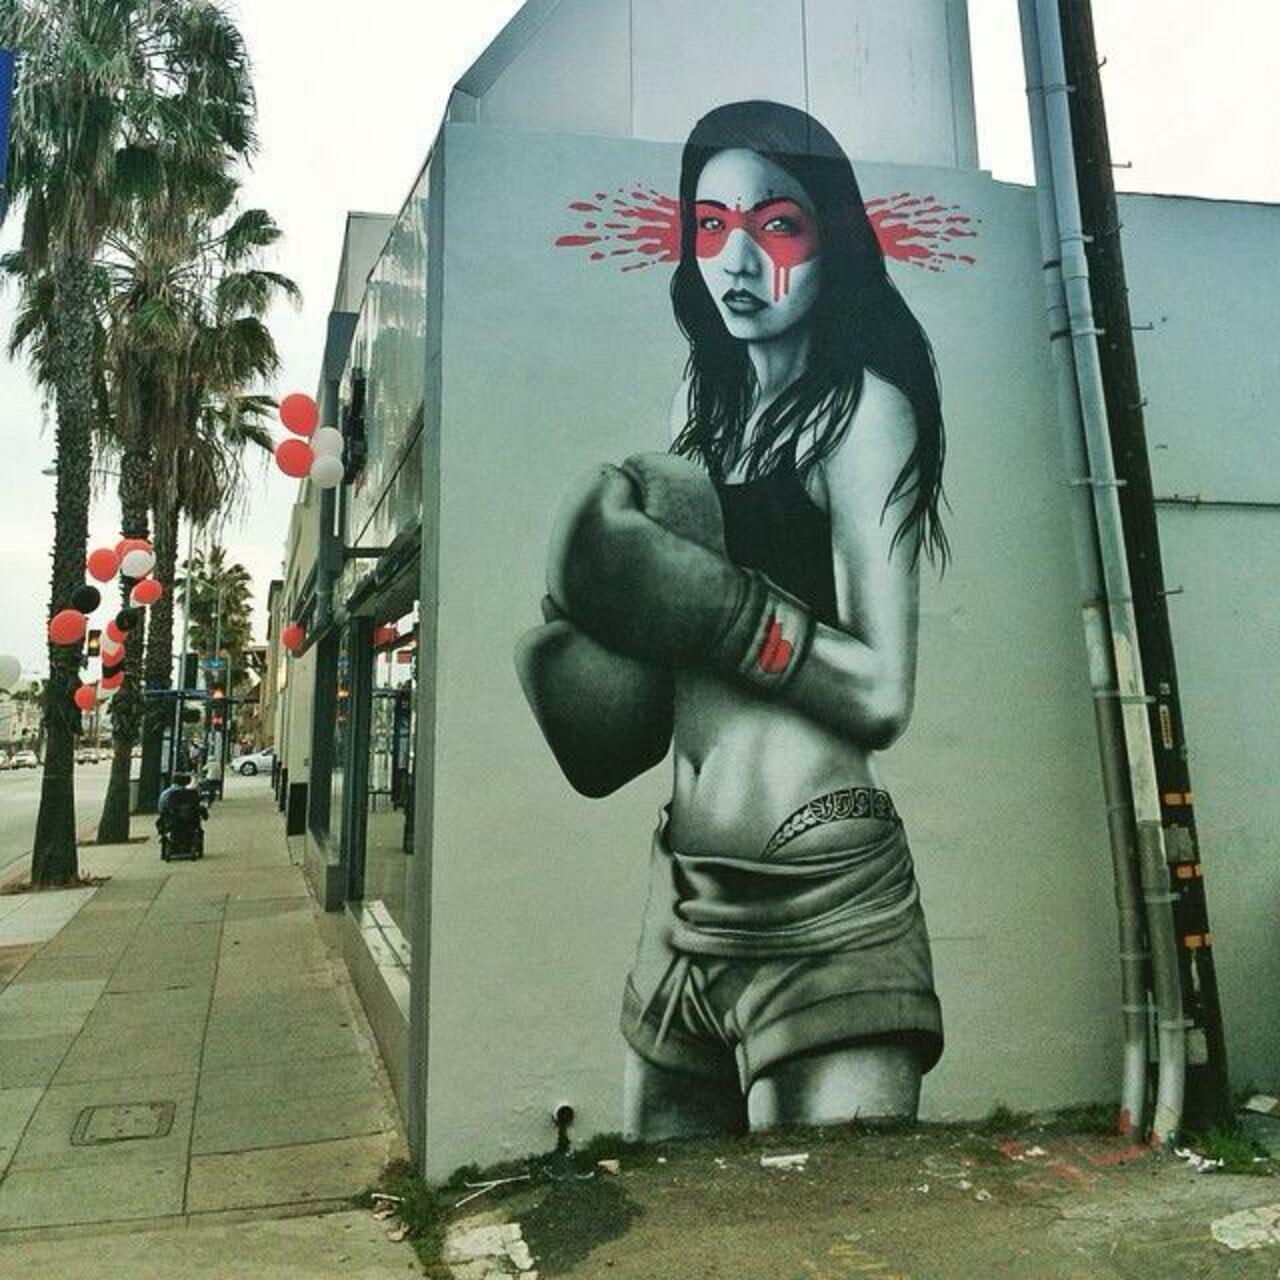 RT grant_factory: New Street Art by the artist FinDac in Santa Monica, CA 

#art #arte #graffiti #streetart http://t.co/AOxGR5l7qK